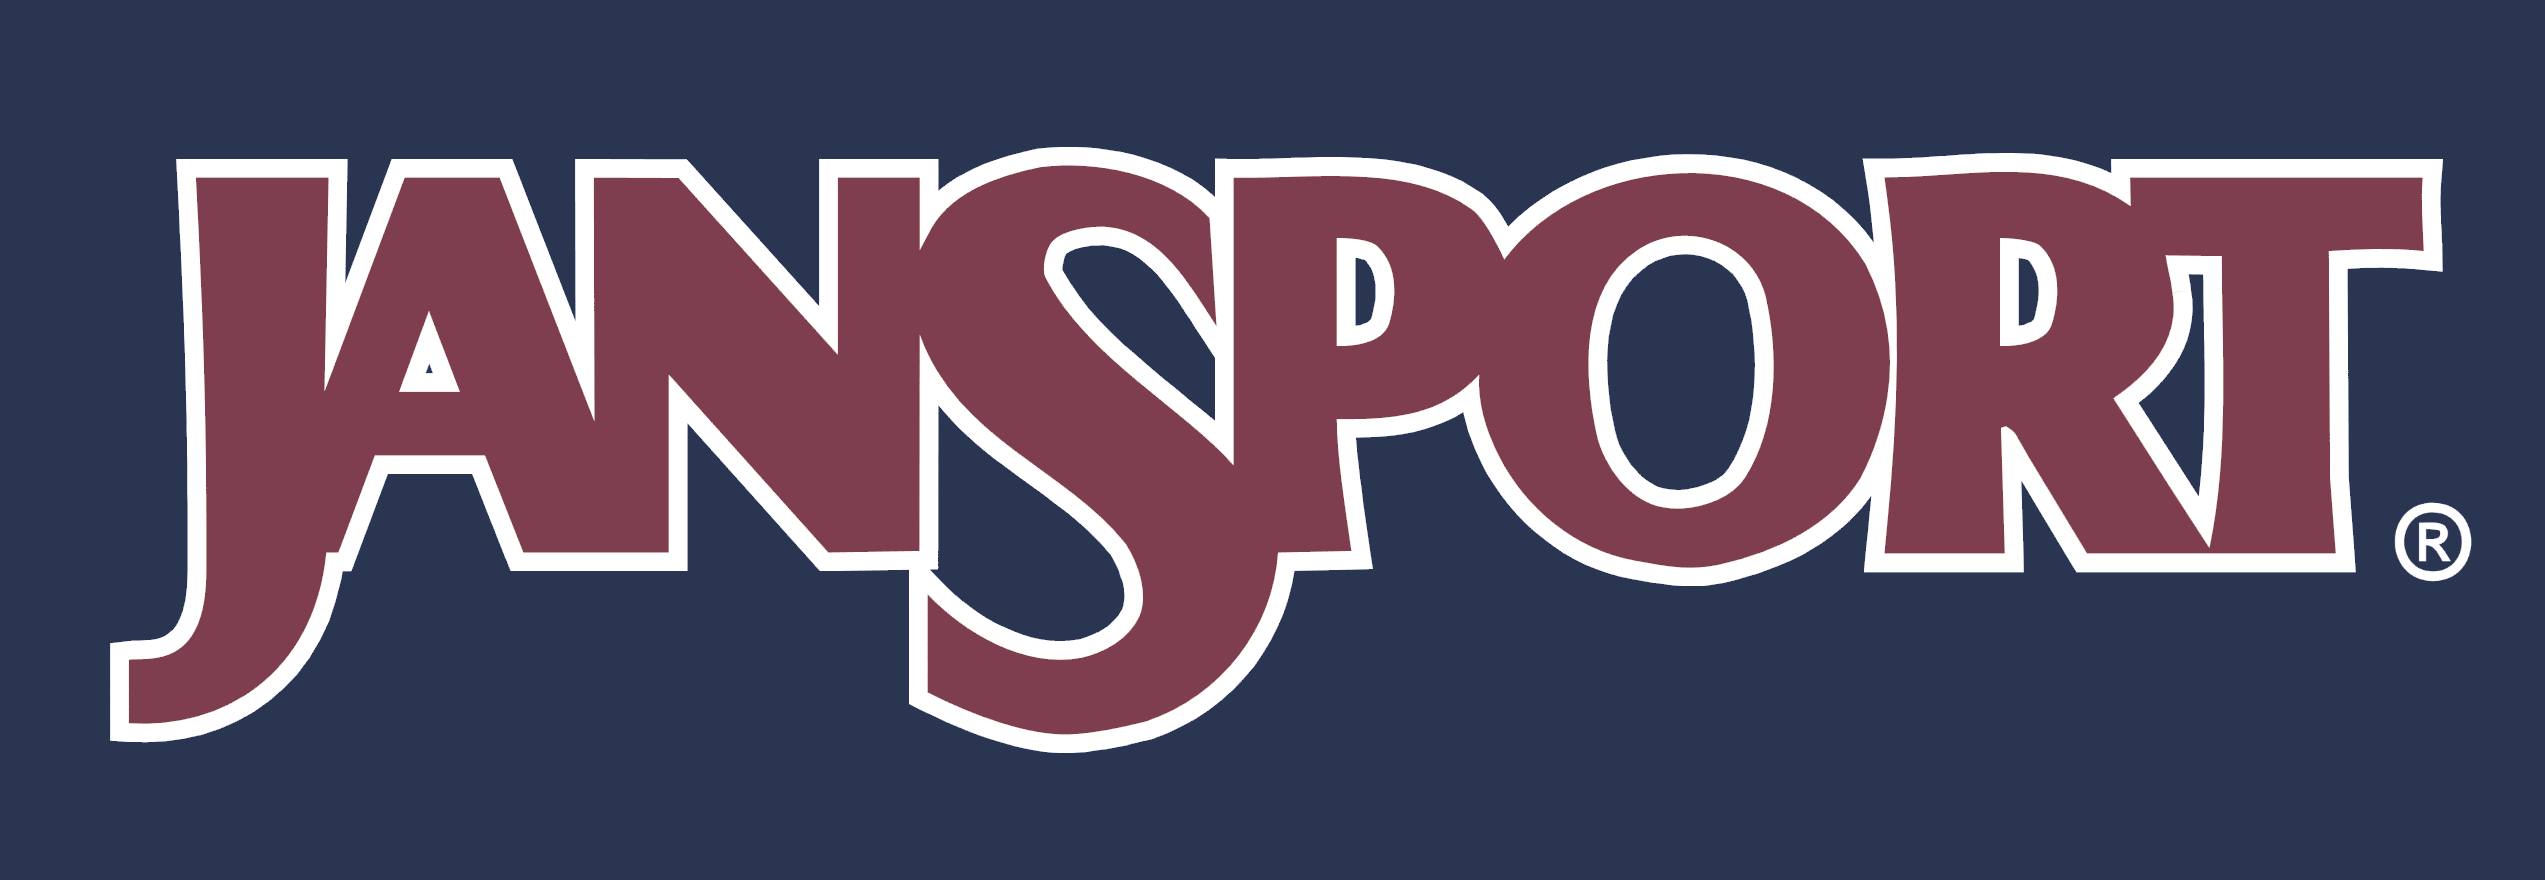 JanSport Logo - JanSport – Logos, brands and logotypes